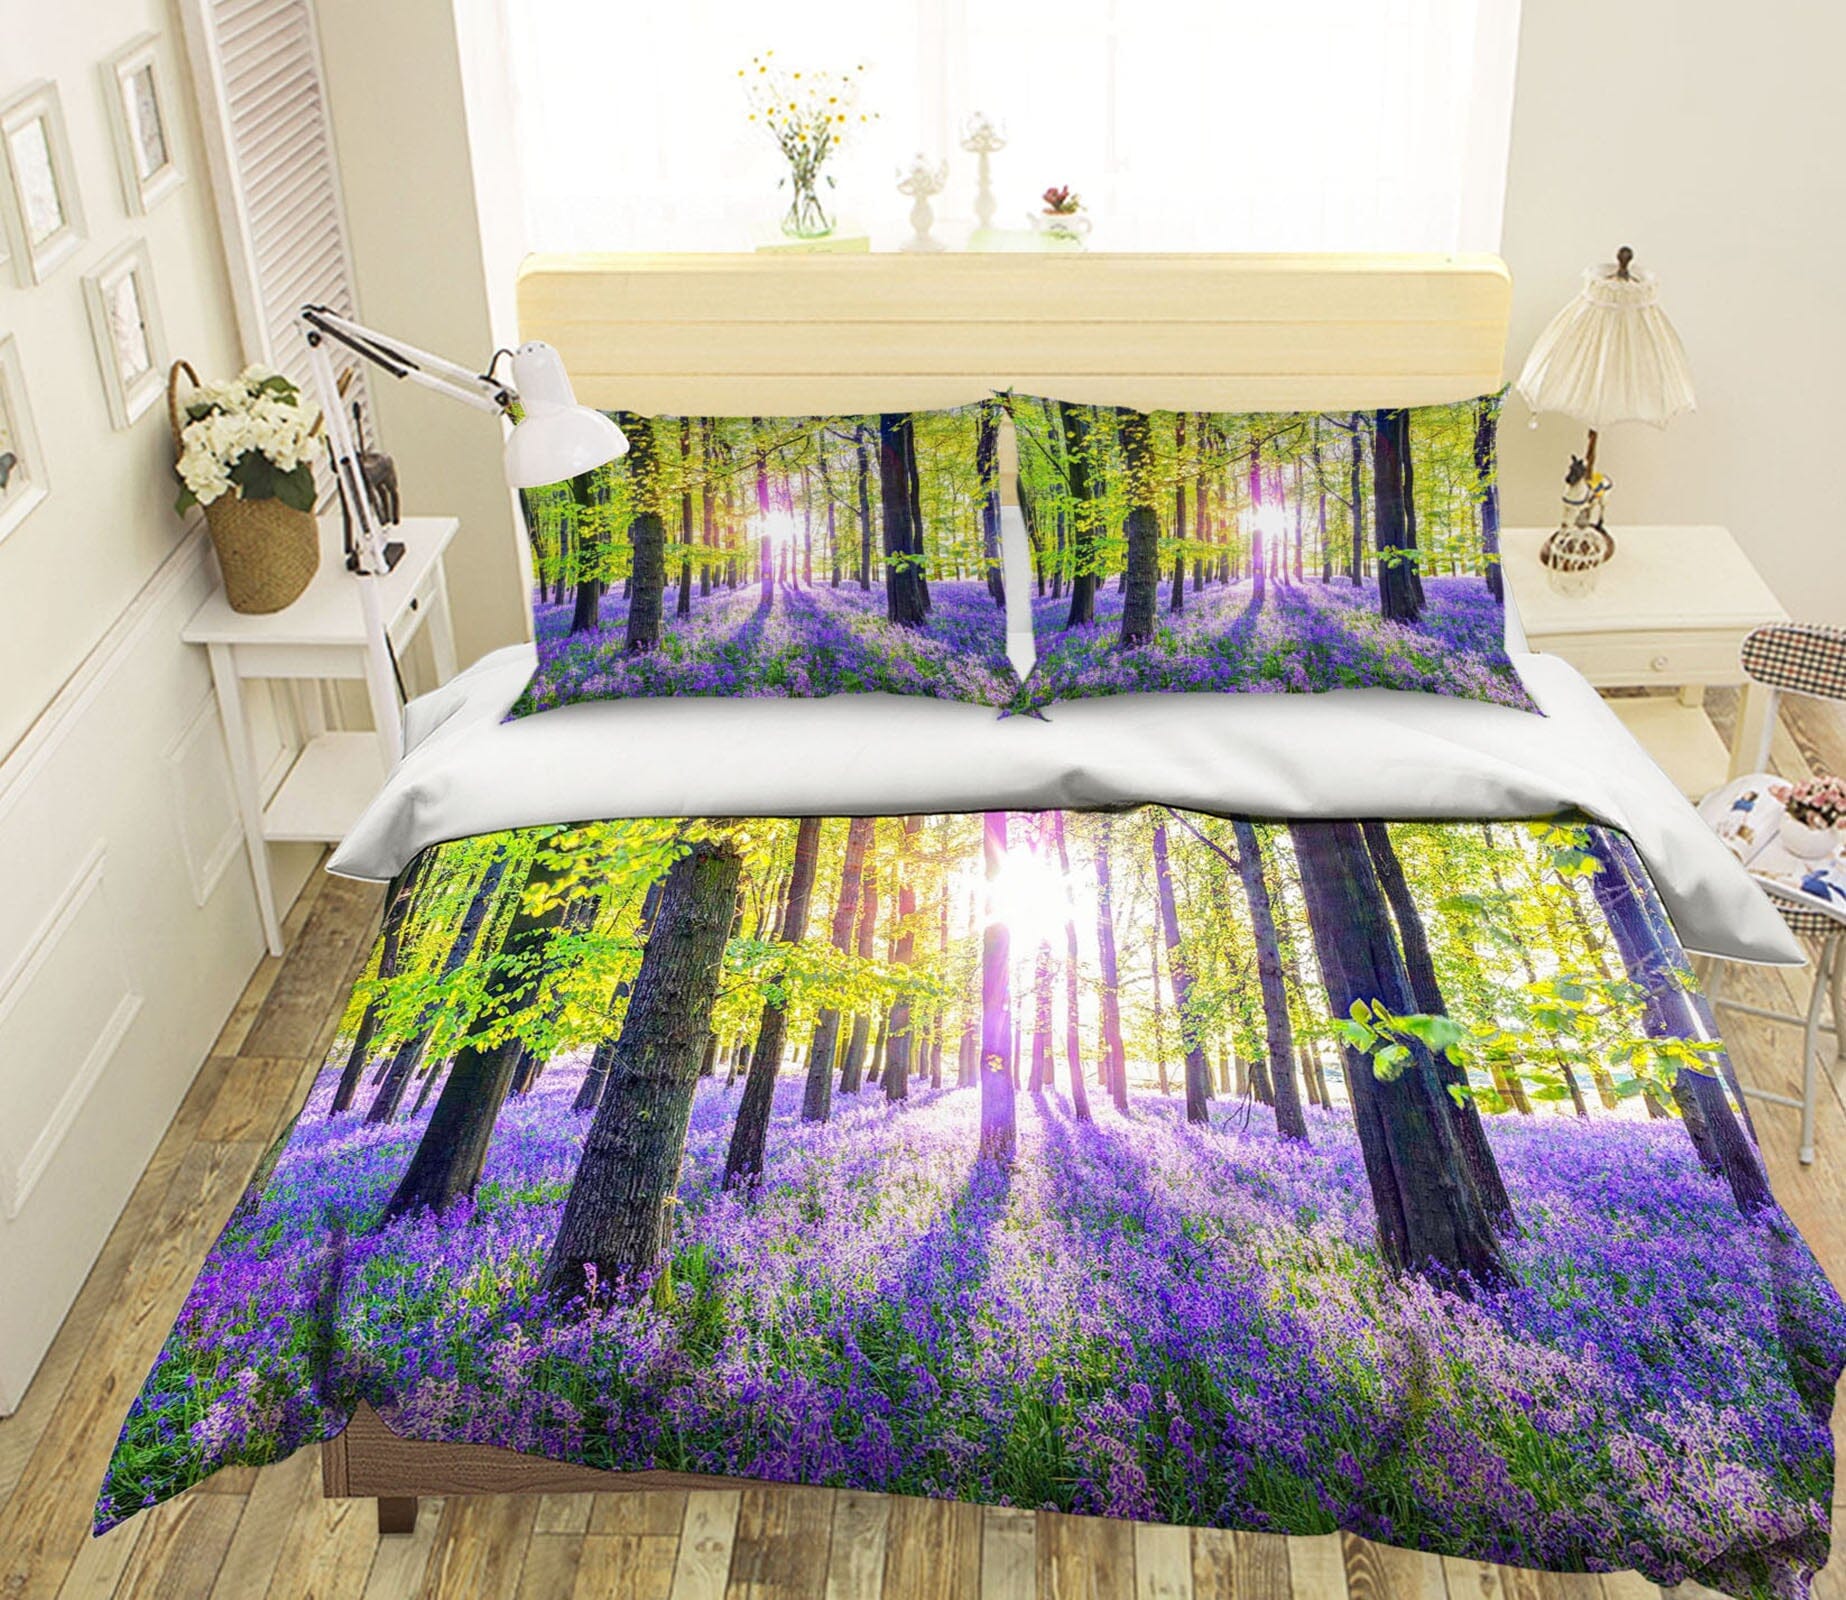 3D Purple Flower Sea 2017 Assaf Frank Bedding Bed Pillowcases Quilt Quiet Covers AJ Creativity Home 